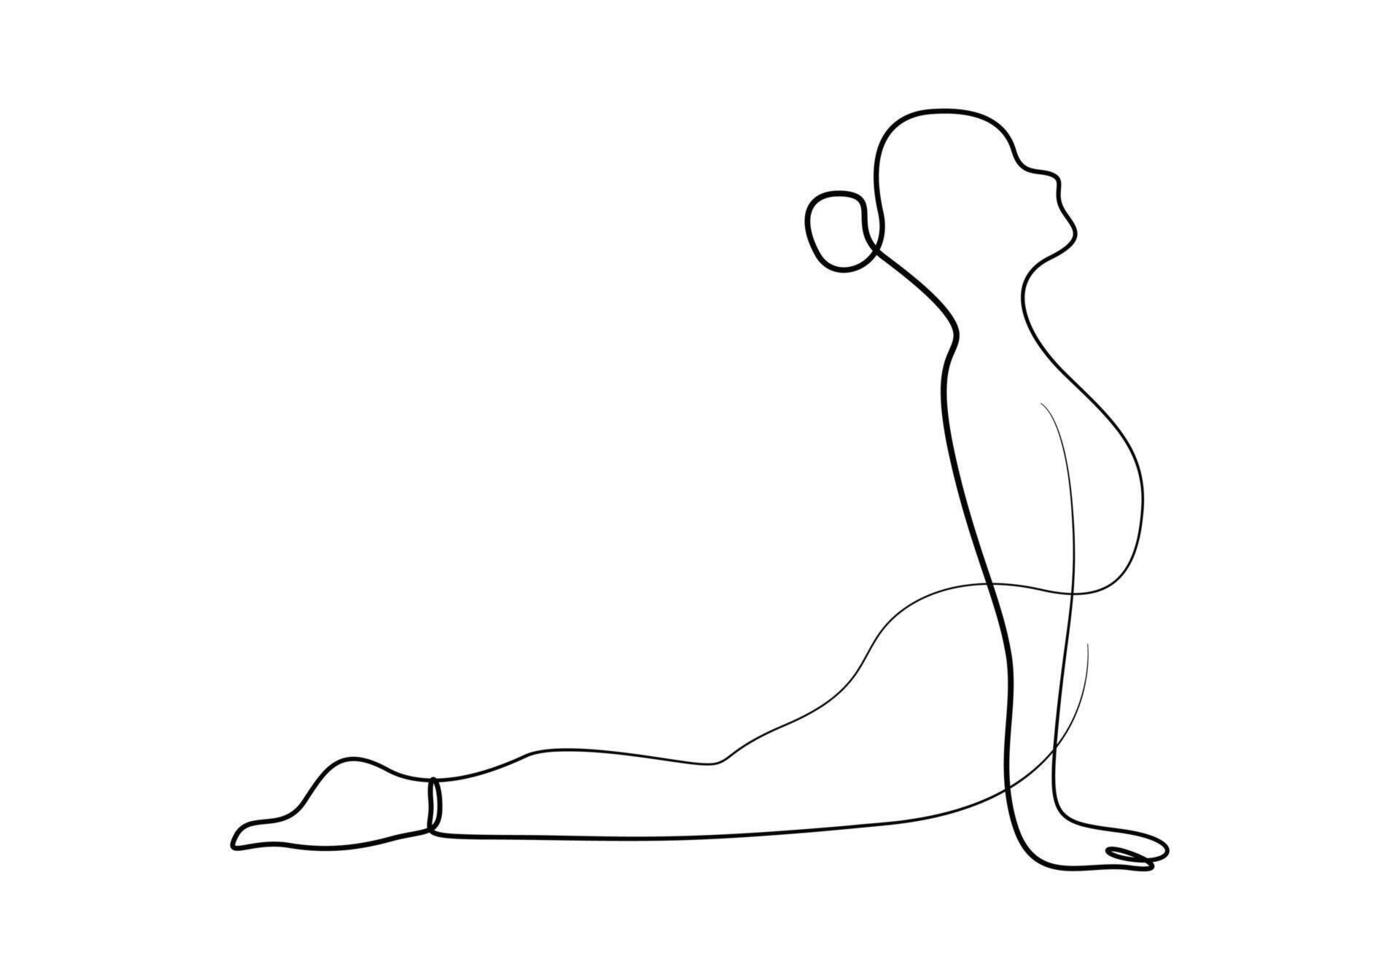 ett kontinuerlig linje teckning av kvinna praktiserande yoga kondition begrepp proffs illustration vektor